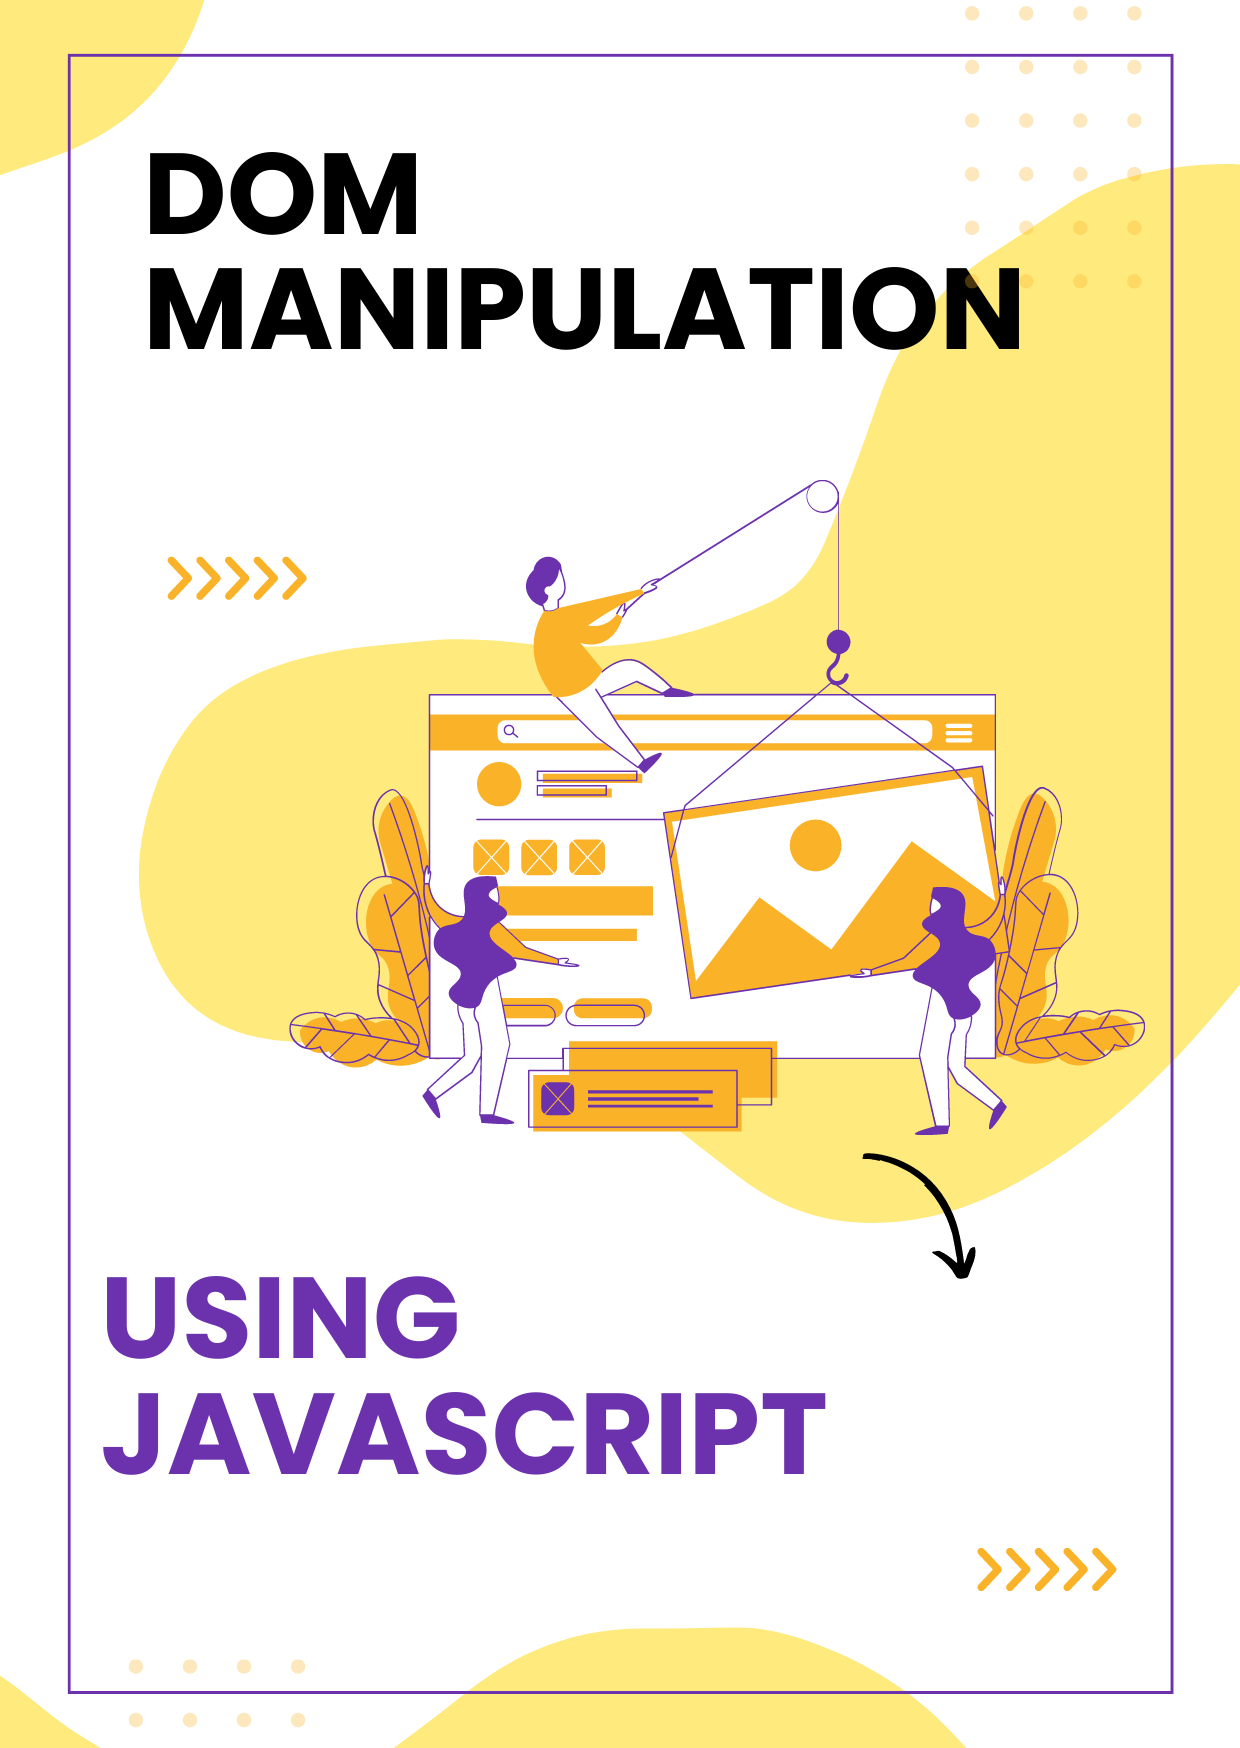 DOM Manipulation in Vanilla JavaScript